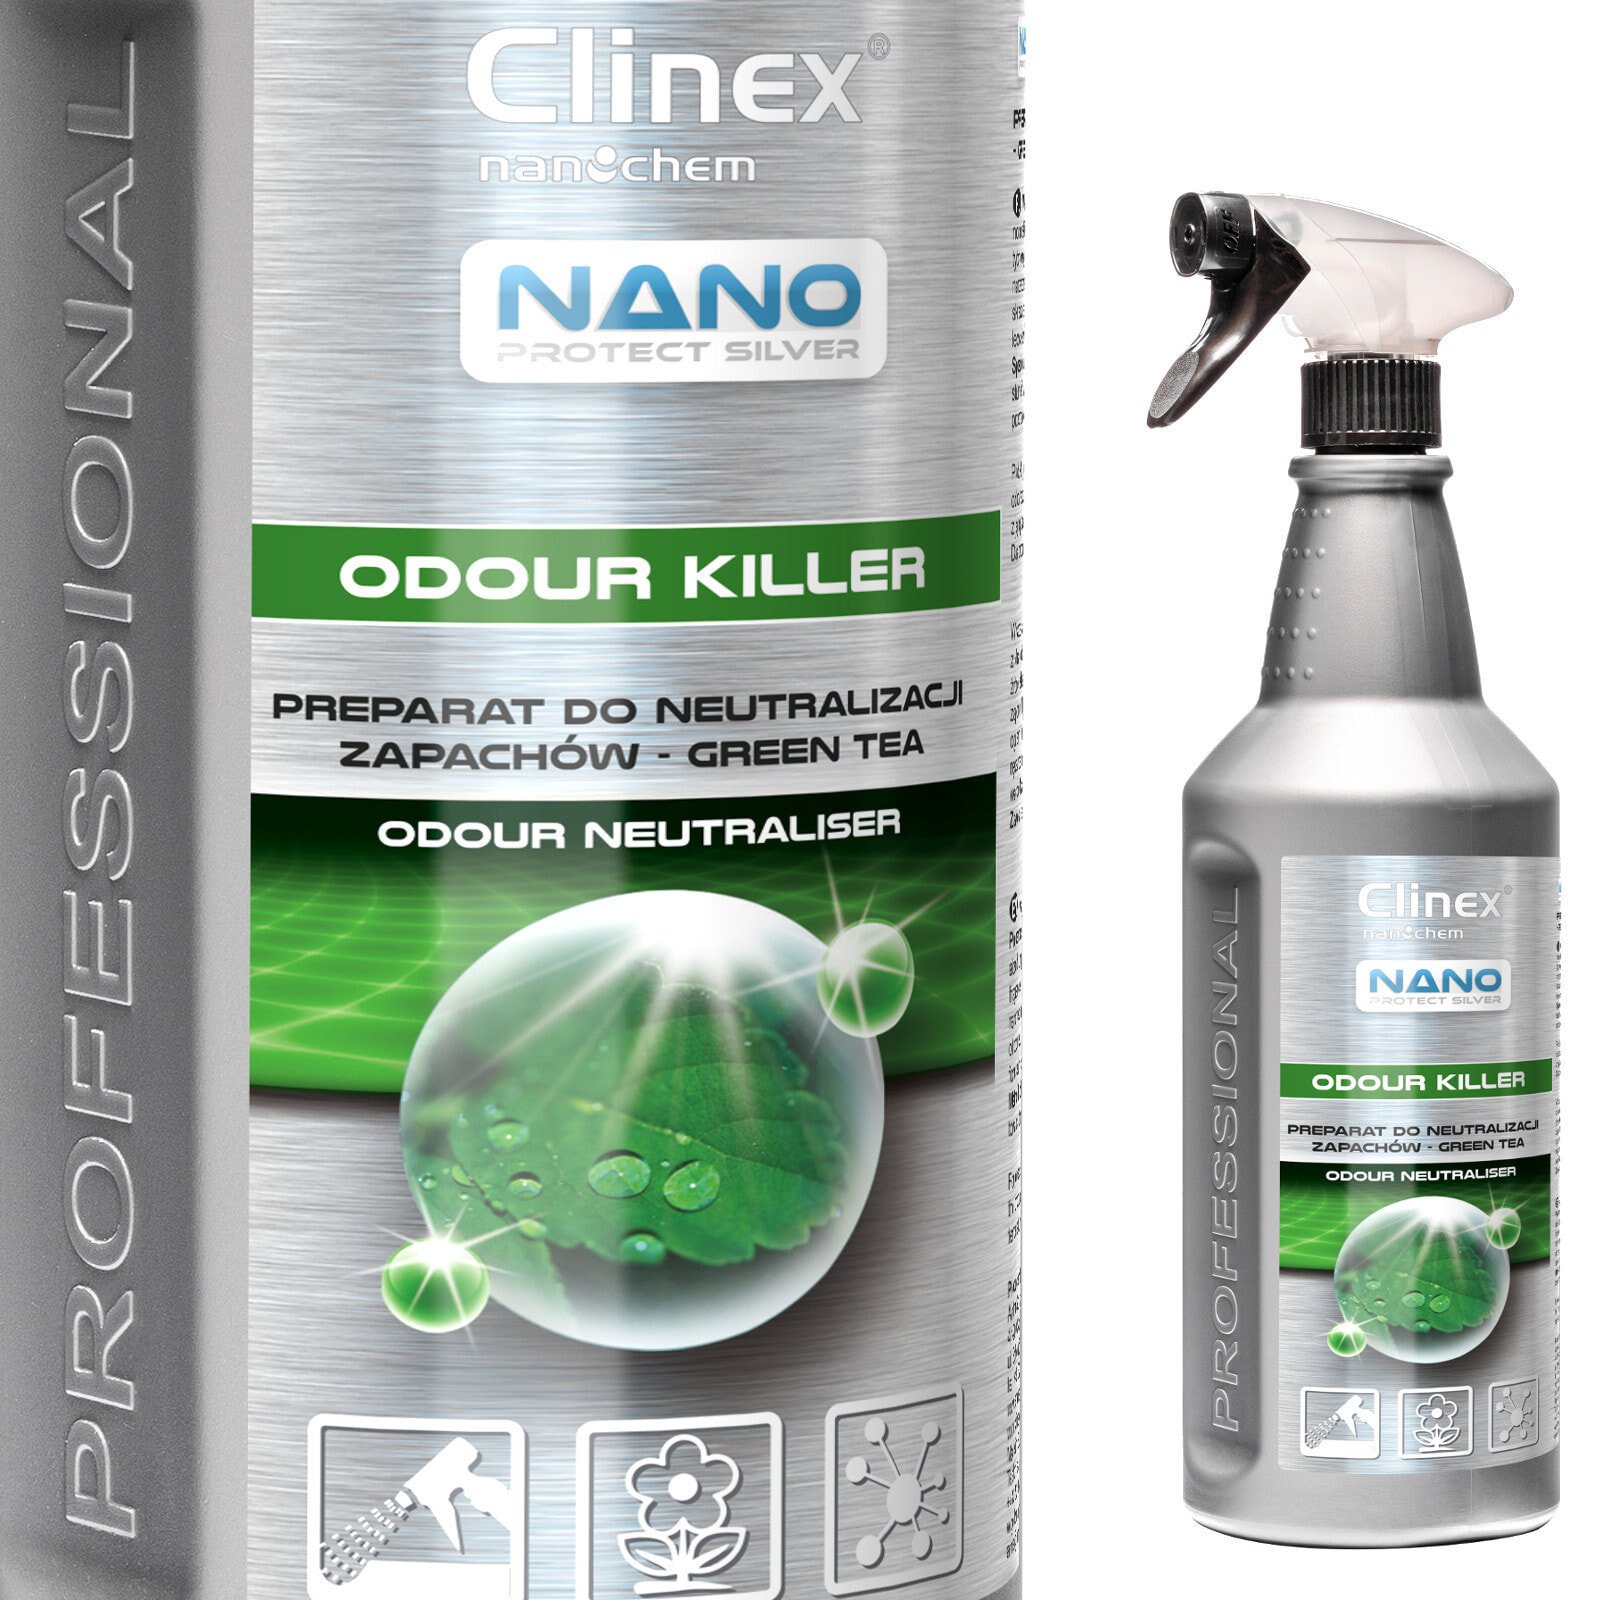 Air freshener for neutralizing odors CLINEX Nano Protect Silver Odor Killer - Green Tea 1L